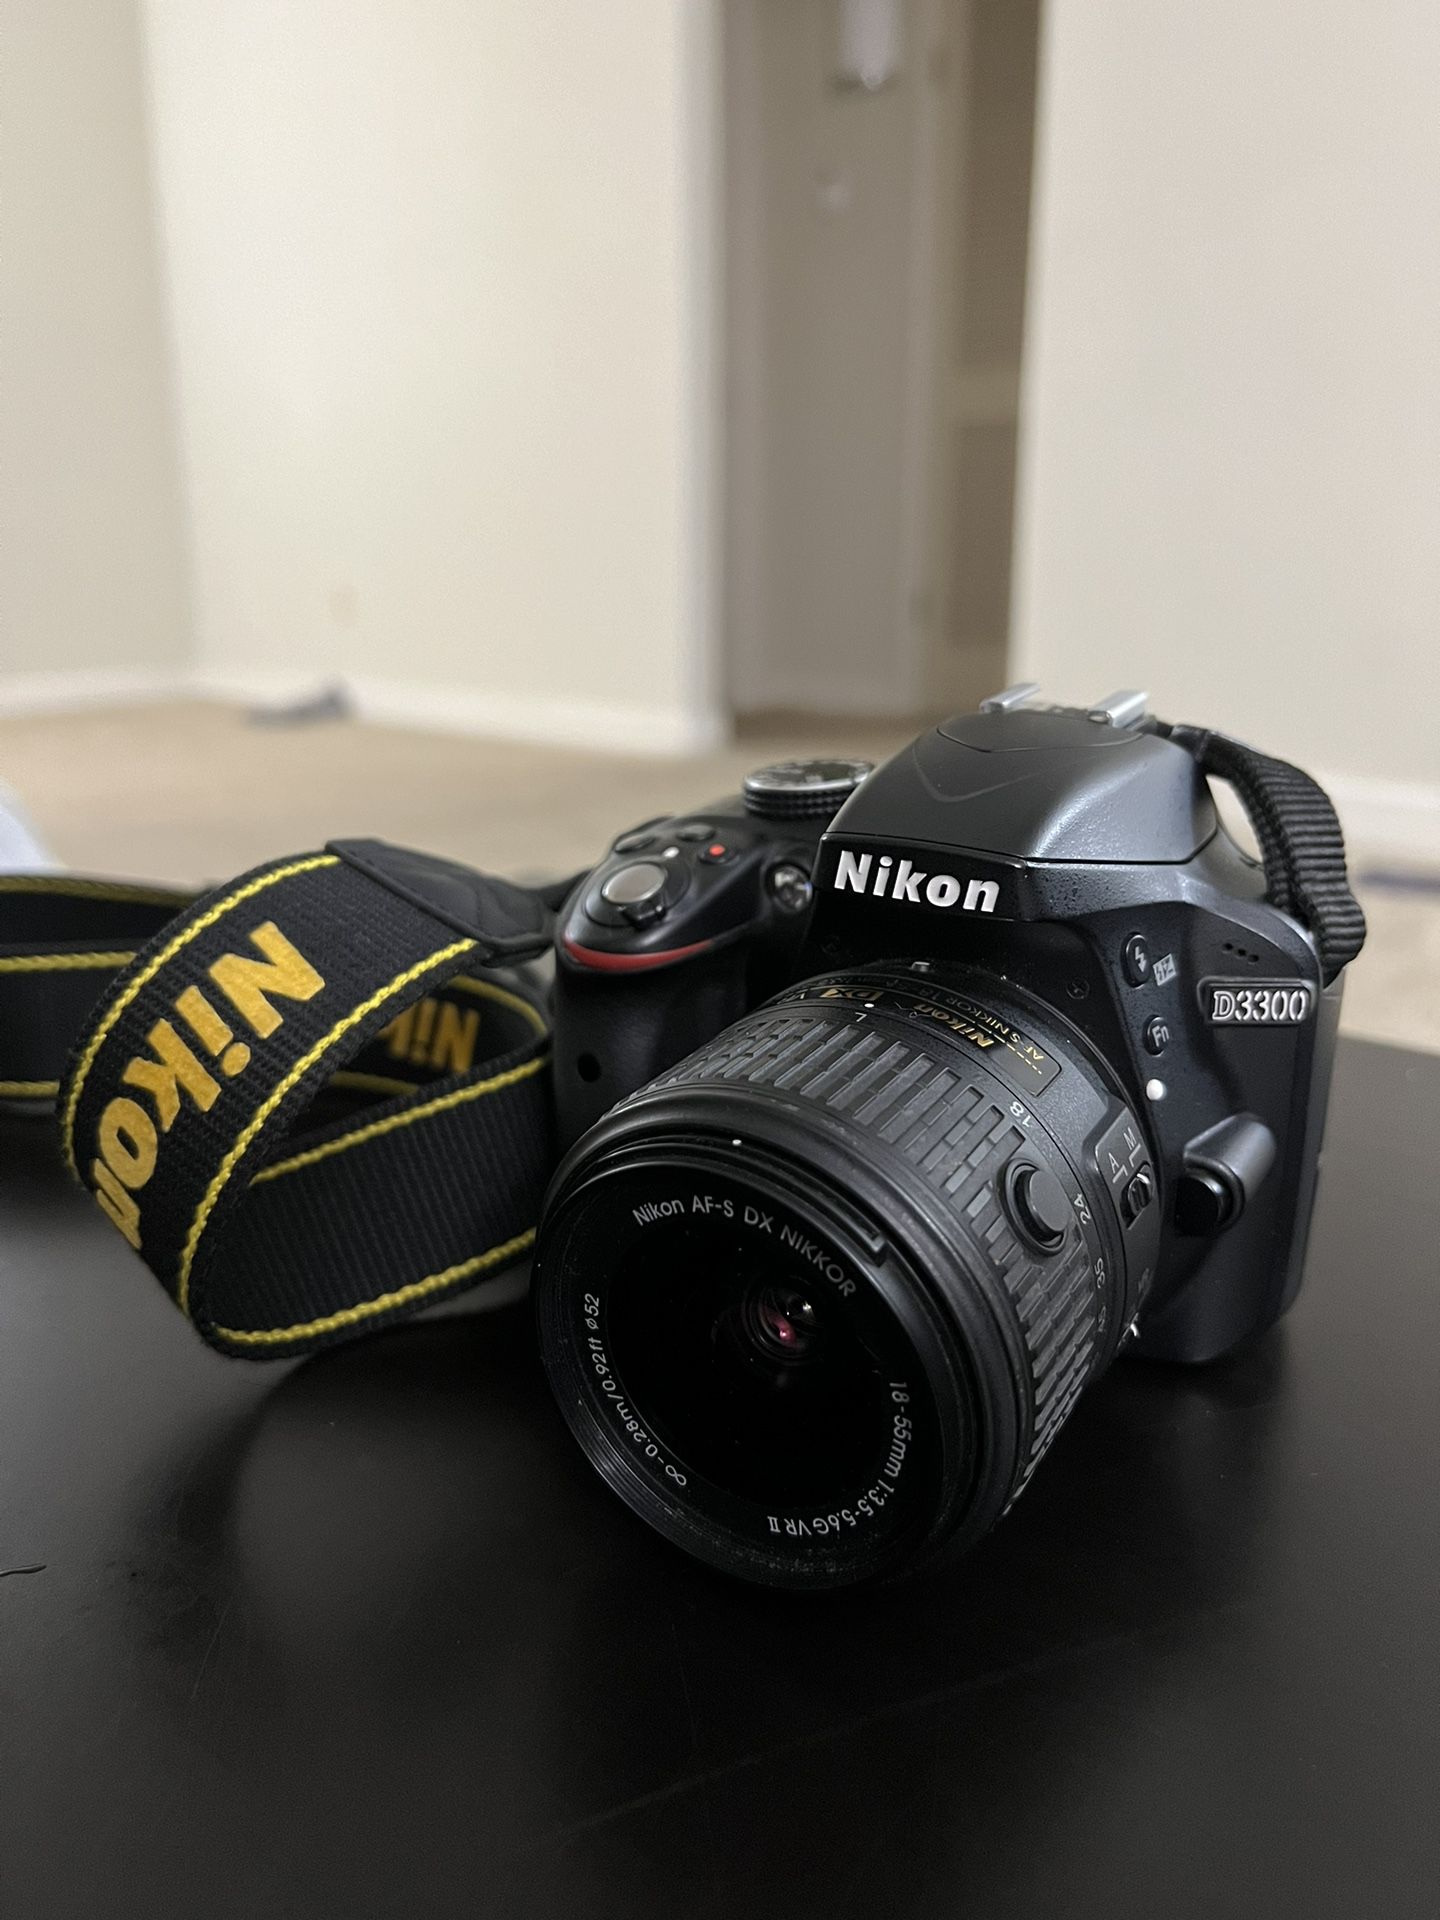 Nikon D3300 Digital SLR with 24.2 Megapixels and 18-55mm Lens Included With Nikon Original Camera Bag